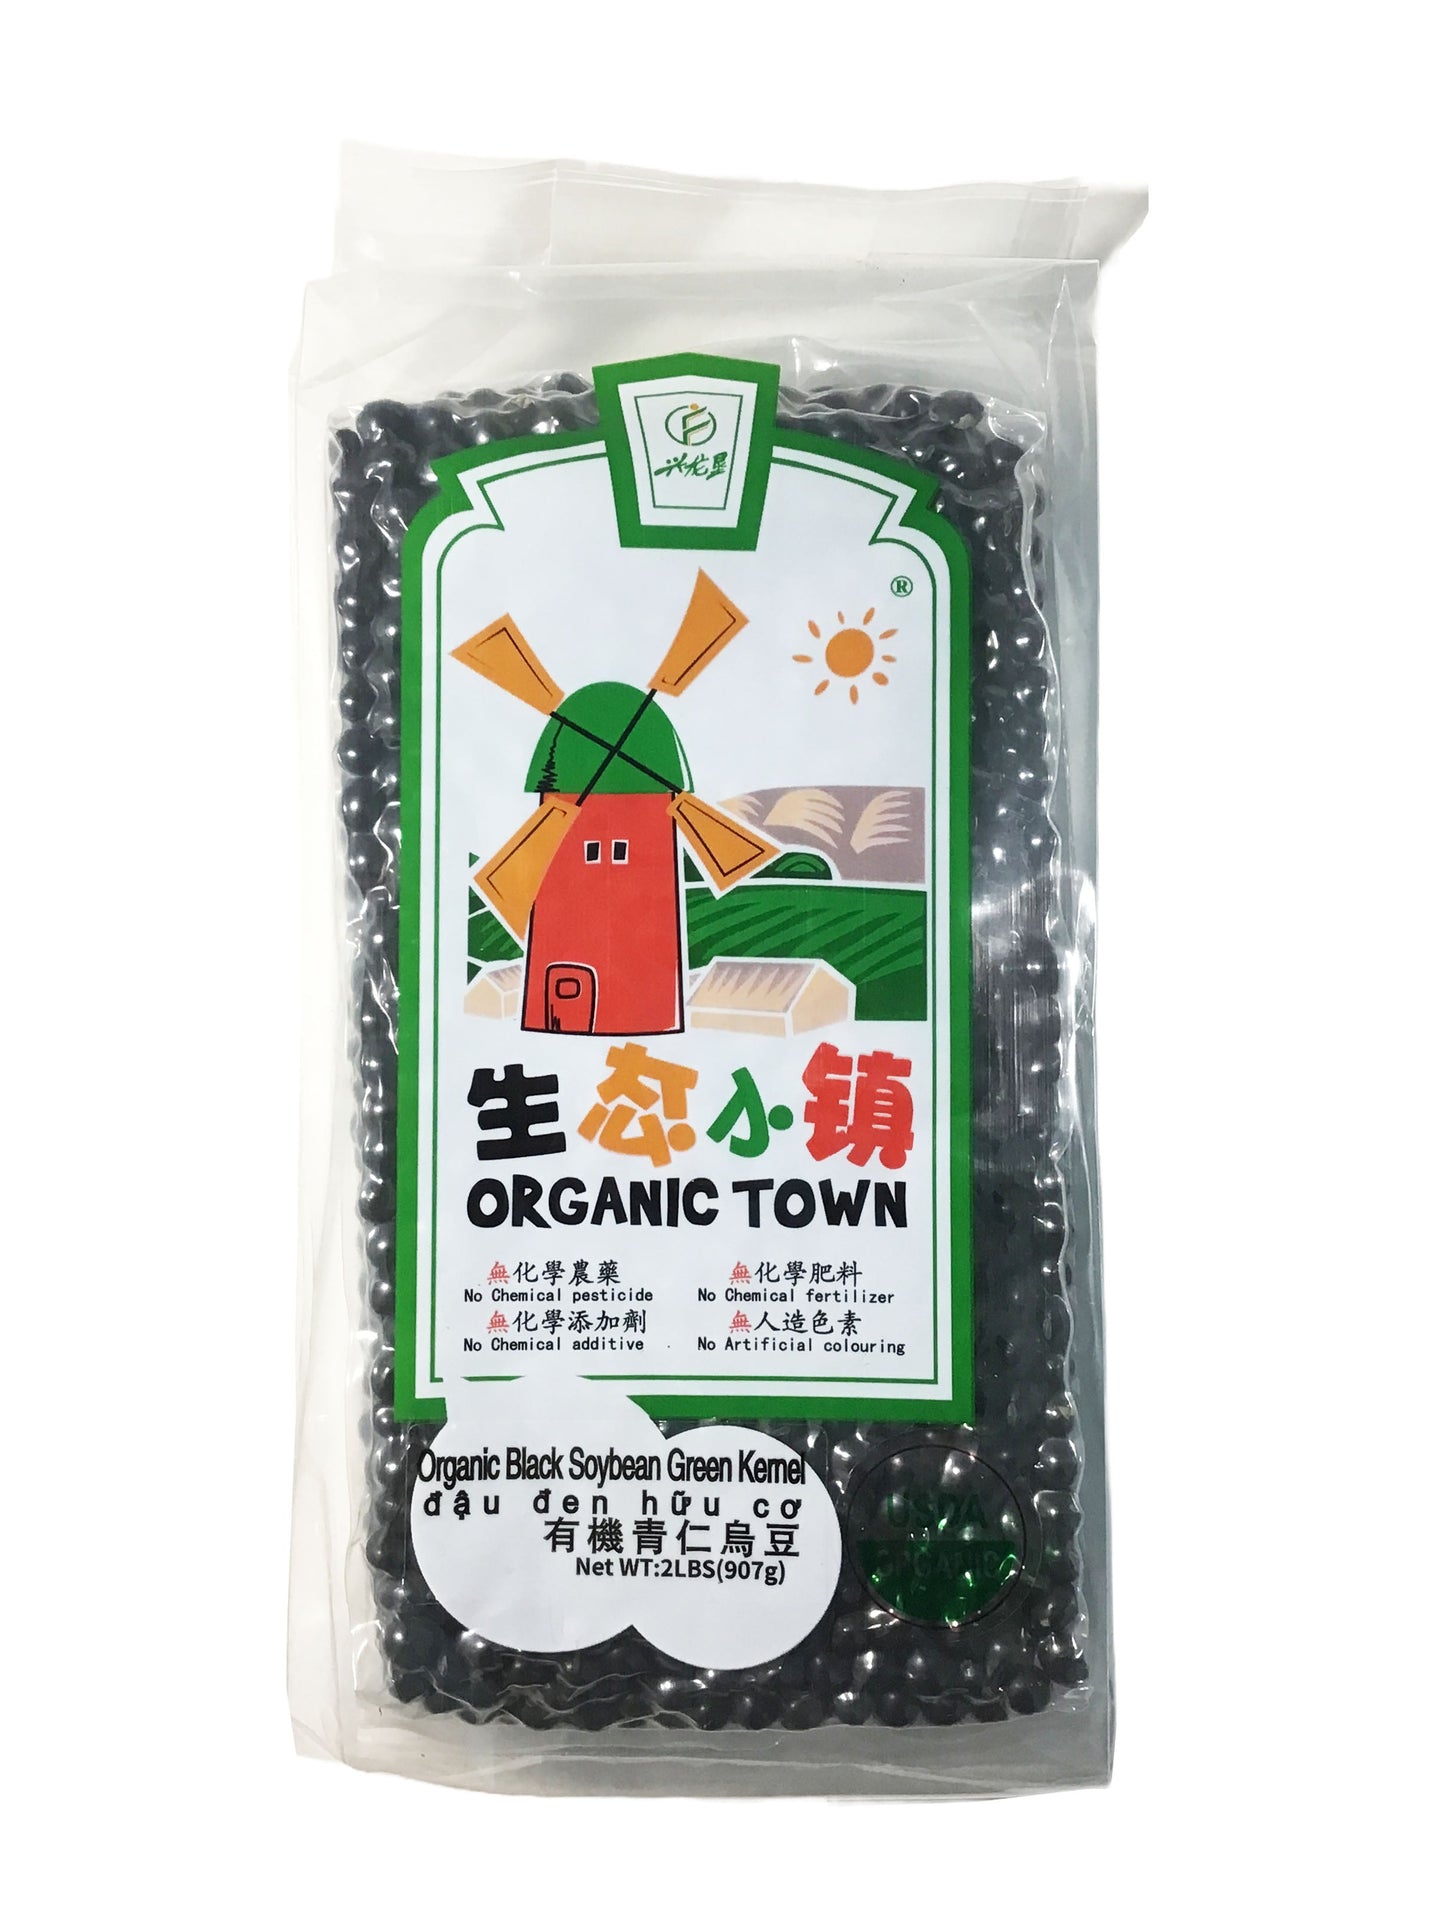 Organic Town Black Soybean Green Kernel 2 lb 兴龙垦 生态小镇 有机青仁乌豆